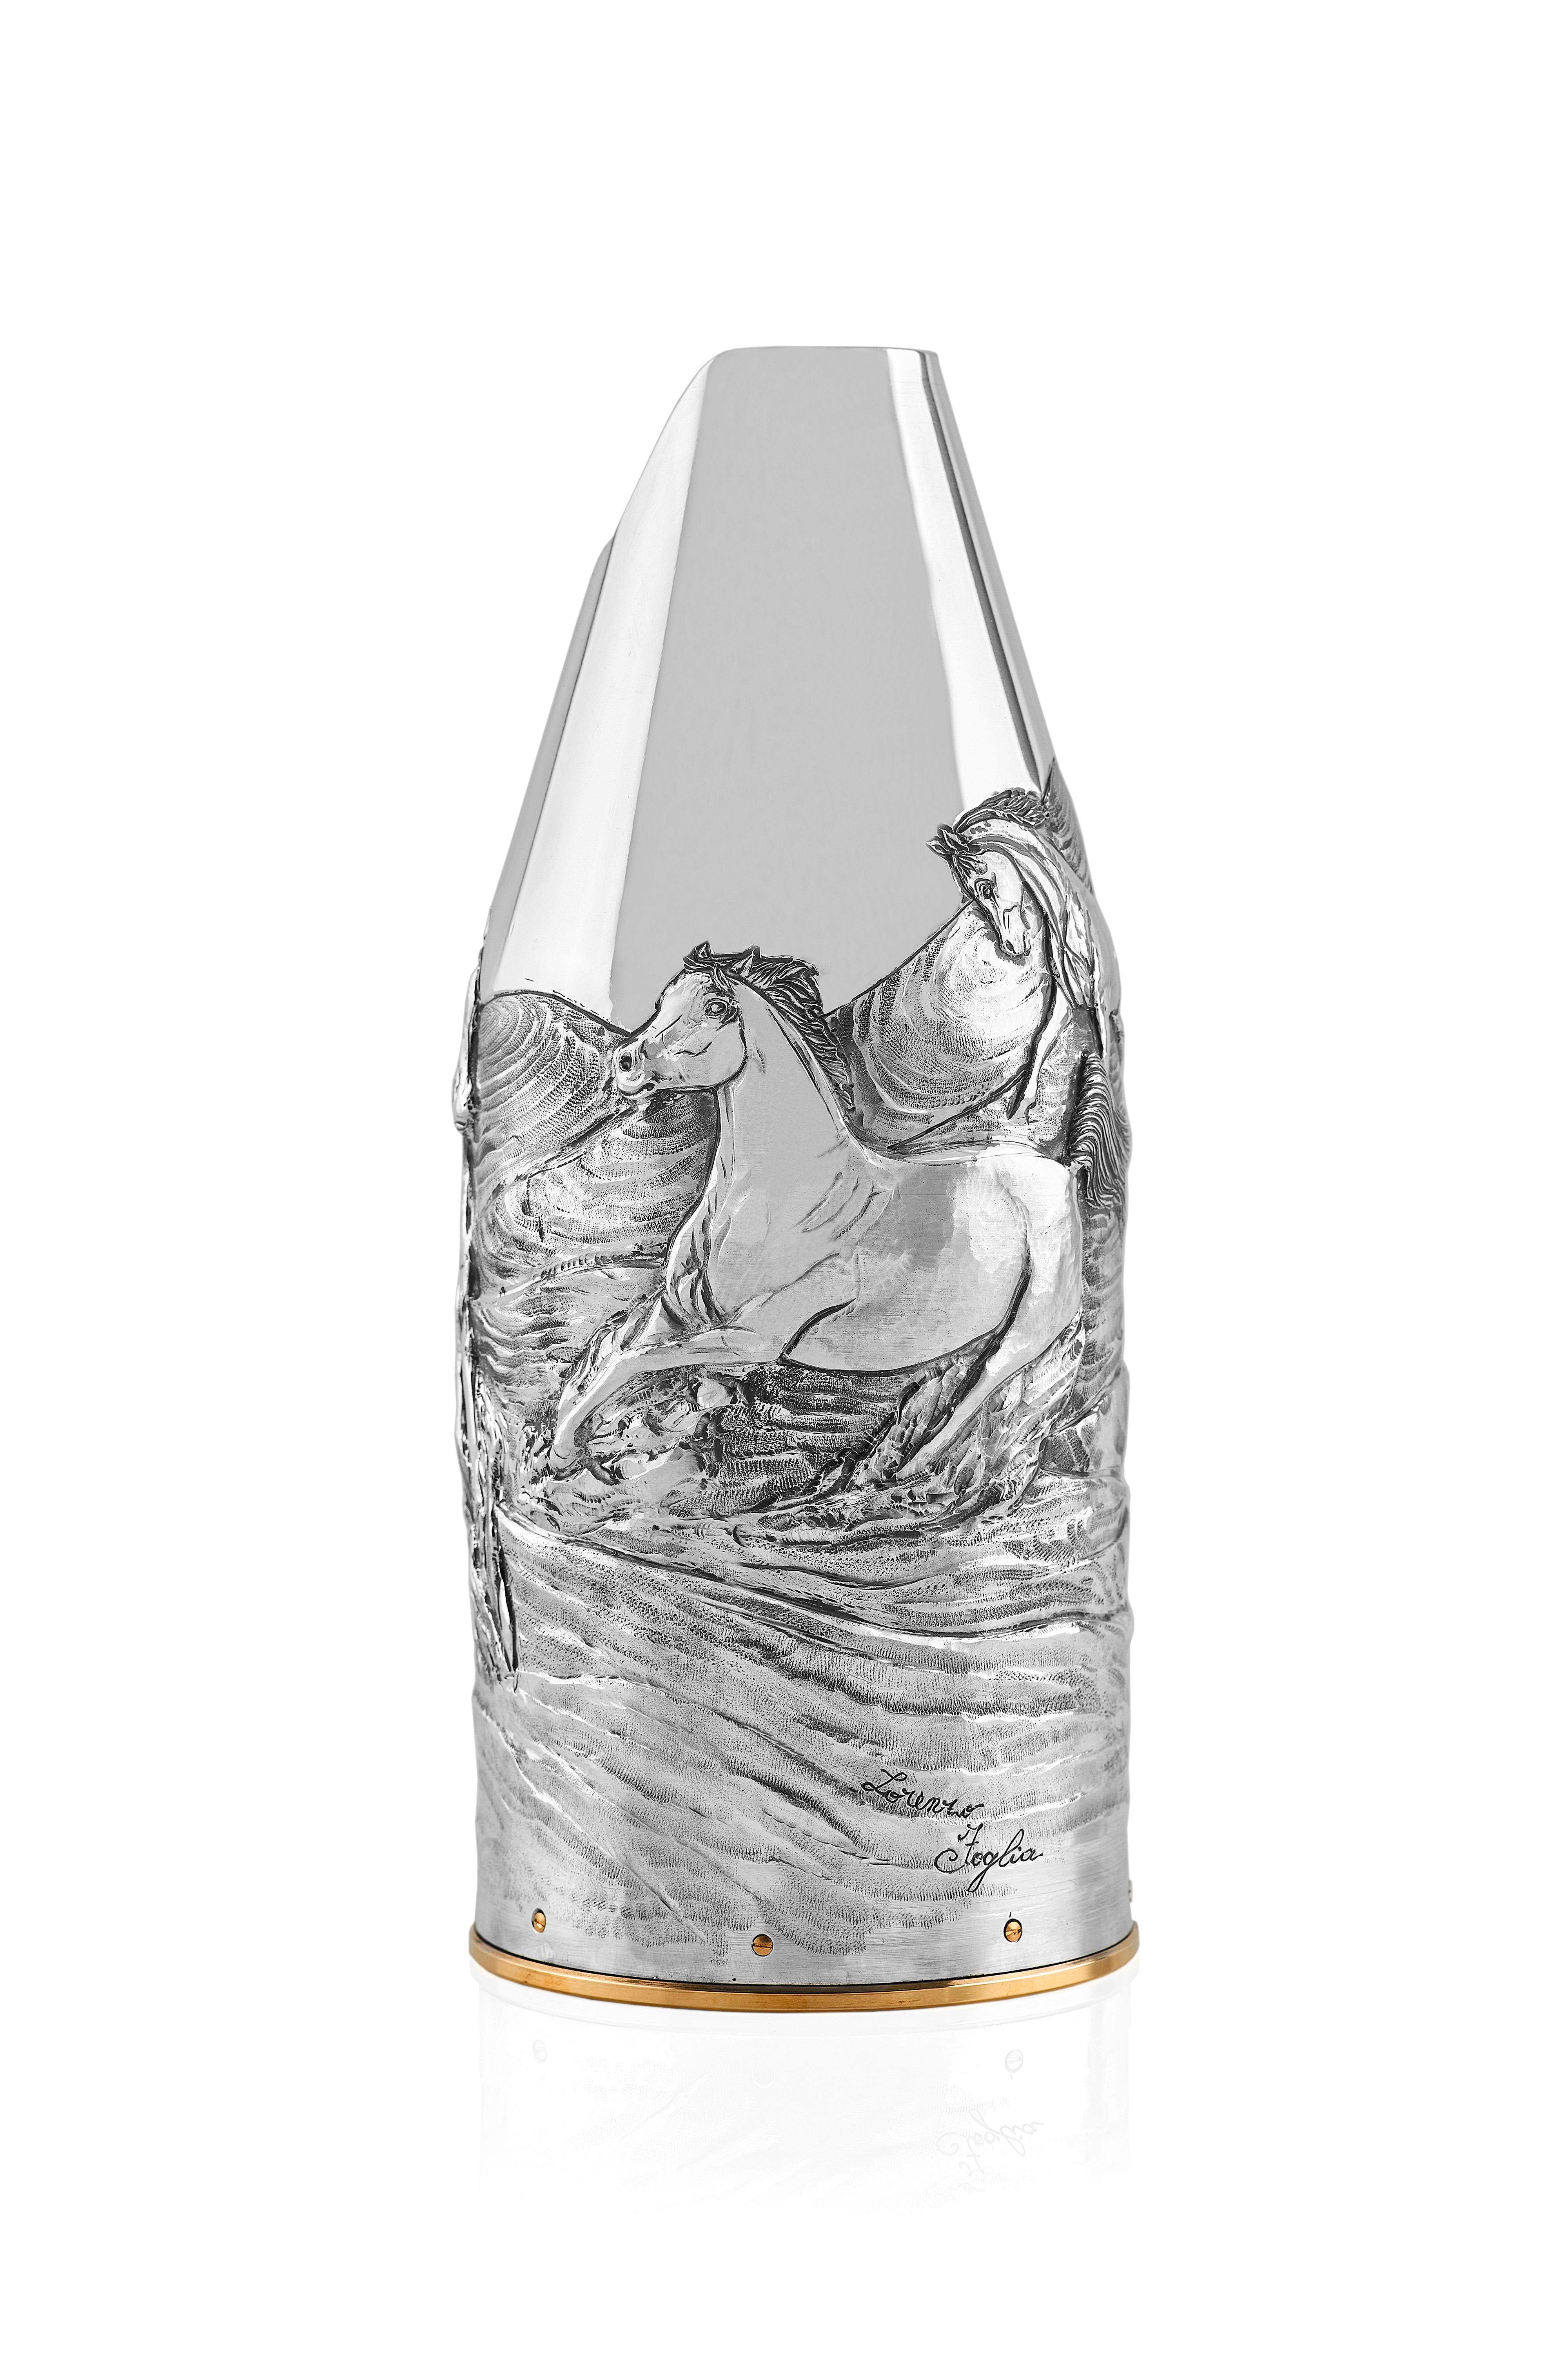  Champagne K-over Spirit, argento 999/°°, Italia For Sale 1